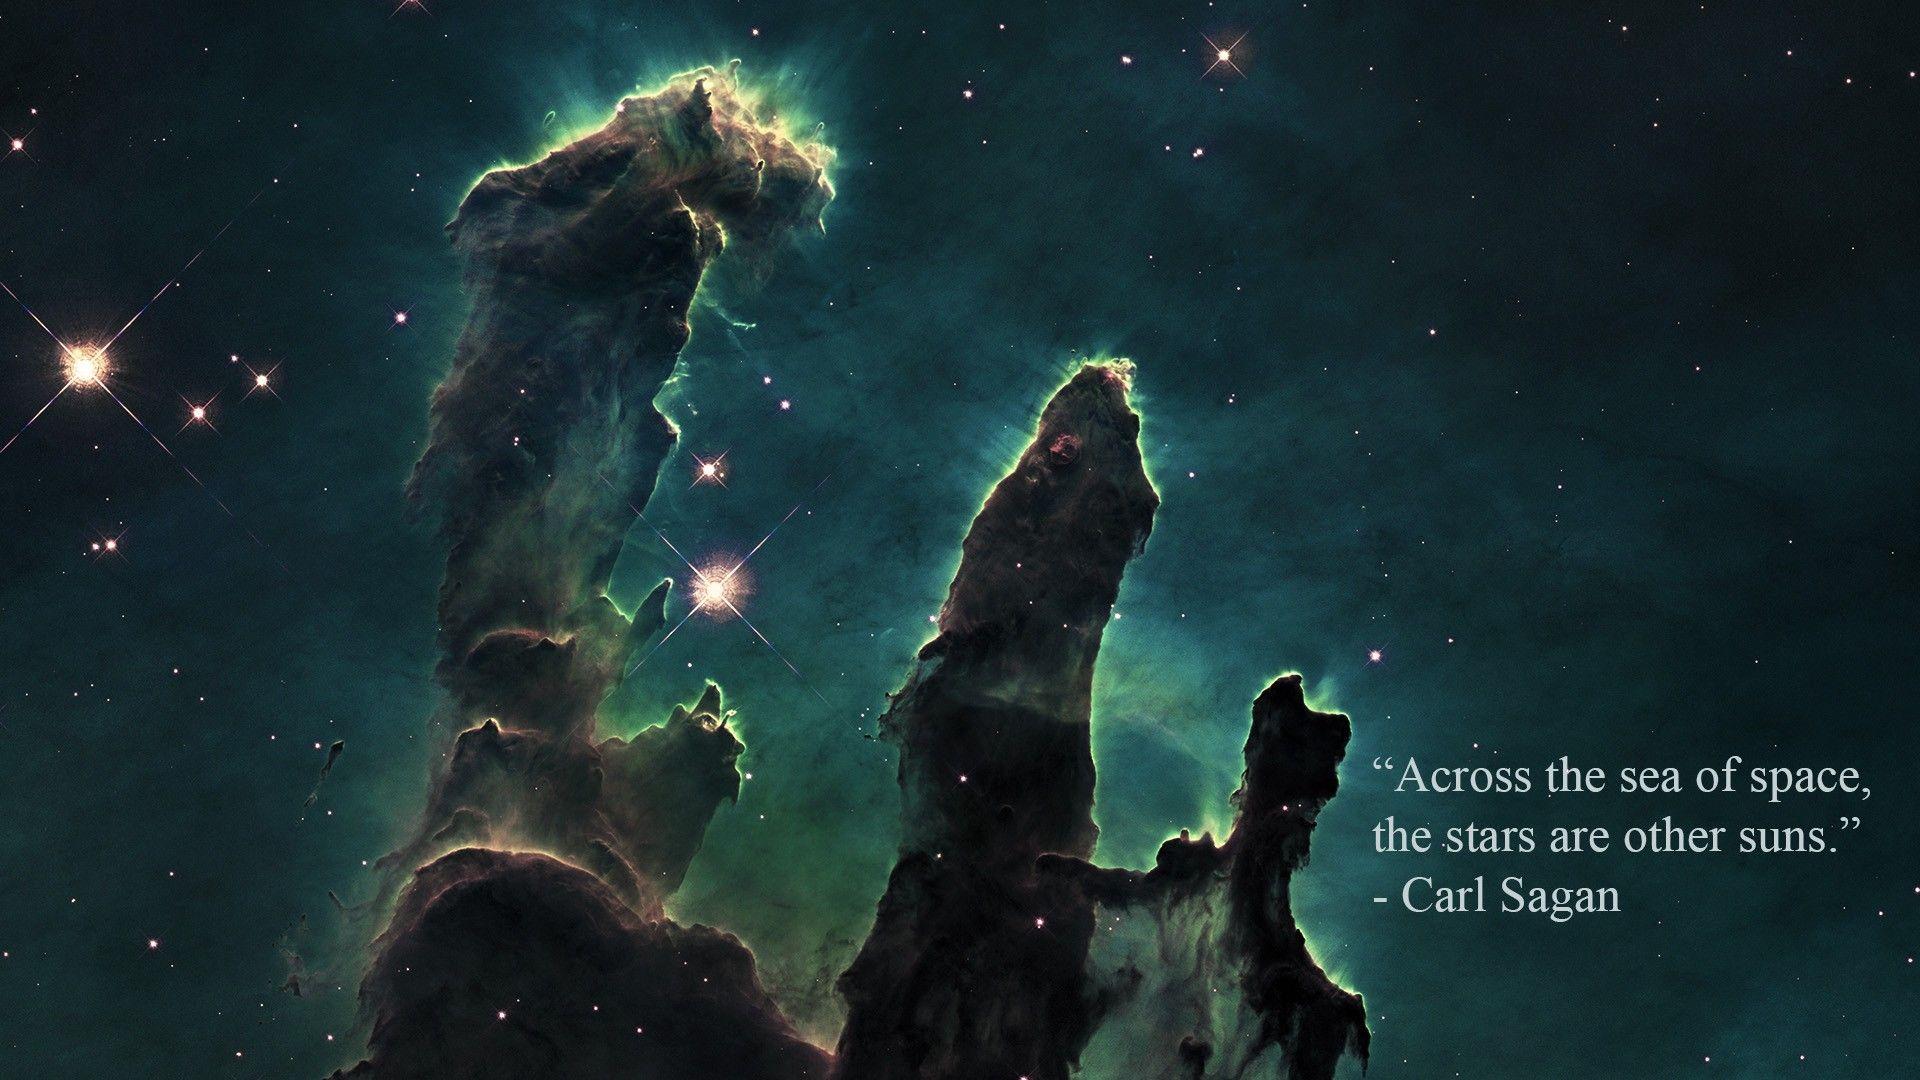 Wallpaper, 1920x1080 px, Carl Sagan, nebula, Pillars of Creation